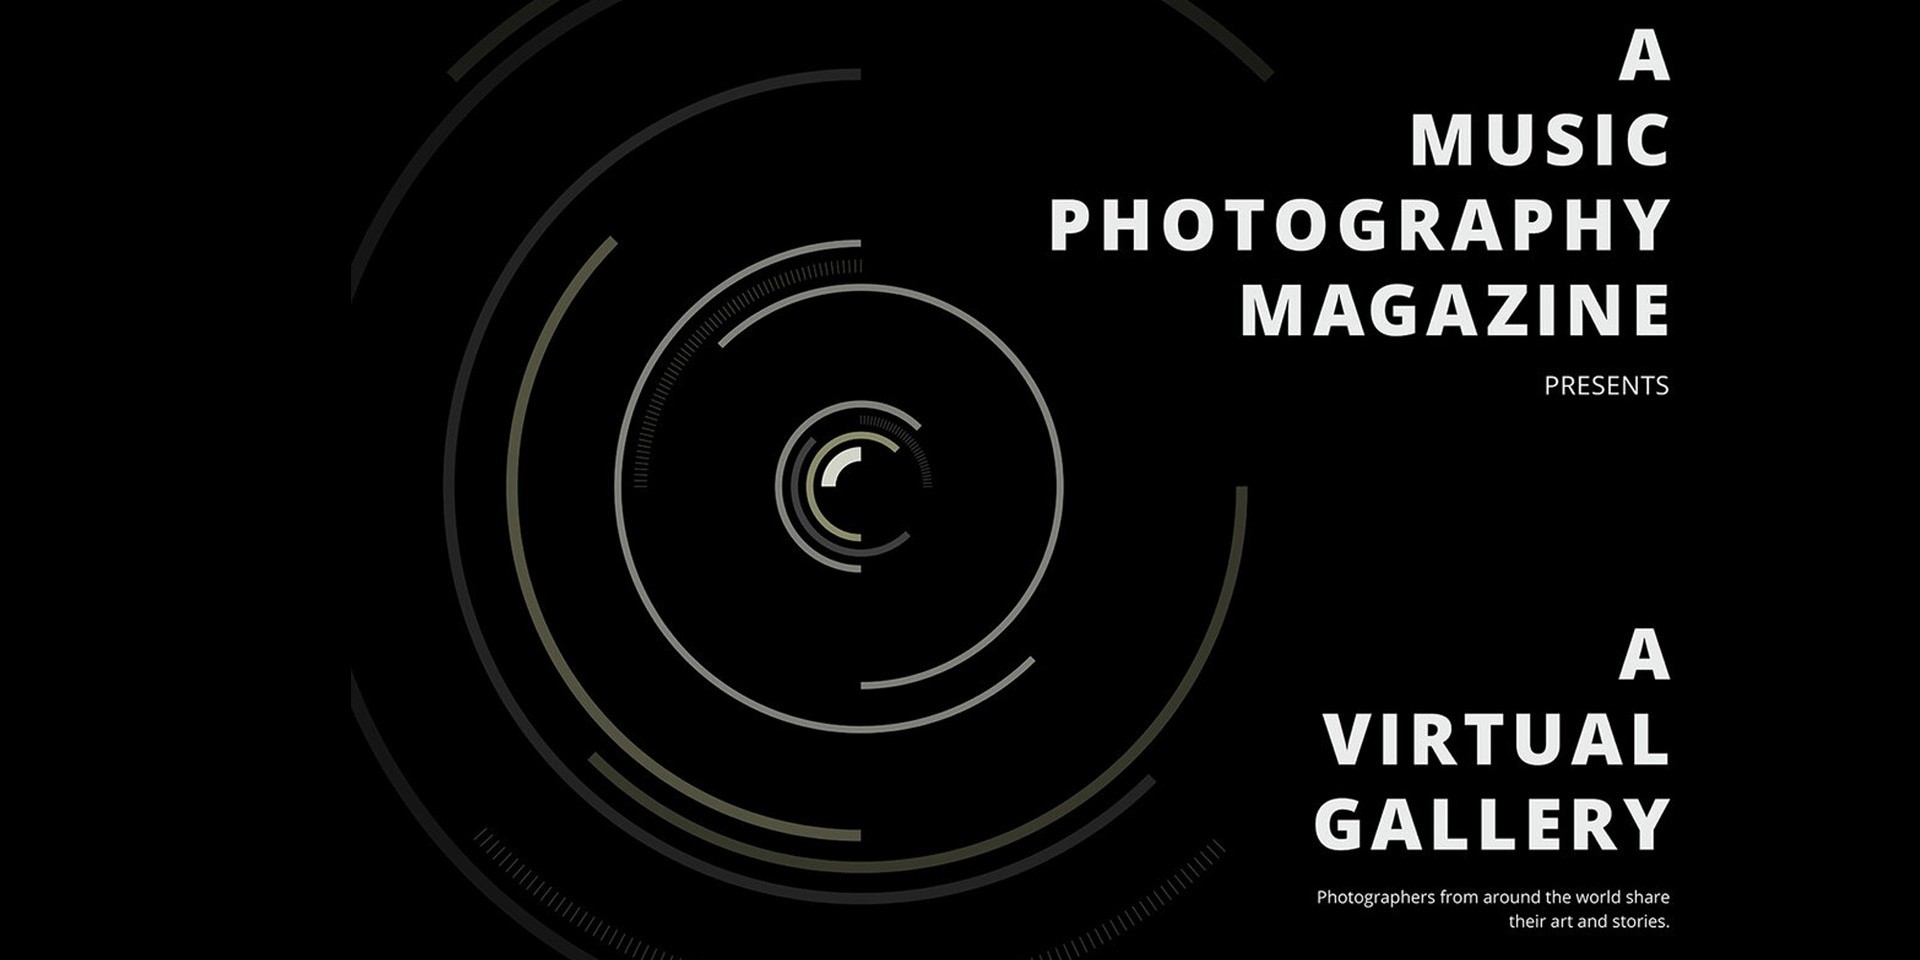 Adam Elmakias's A Music Photography Magazine to go VR with first digital exhibit